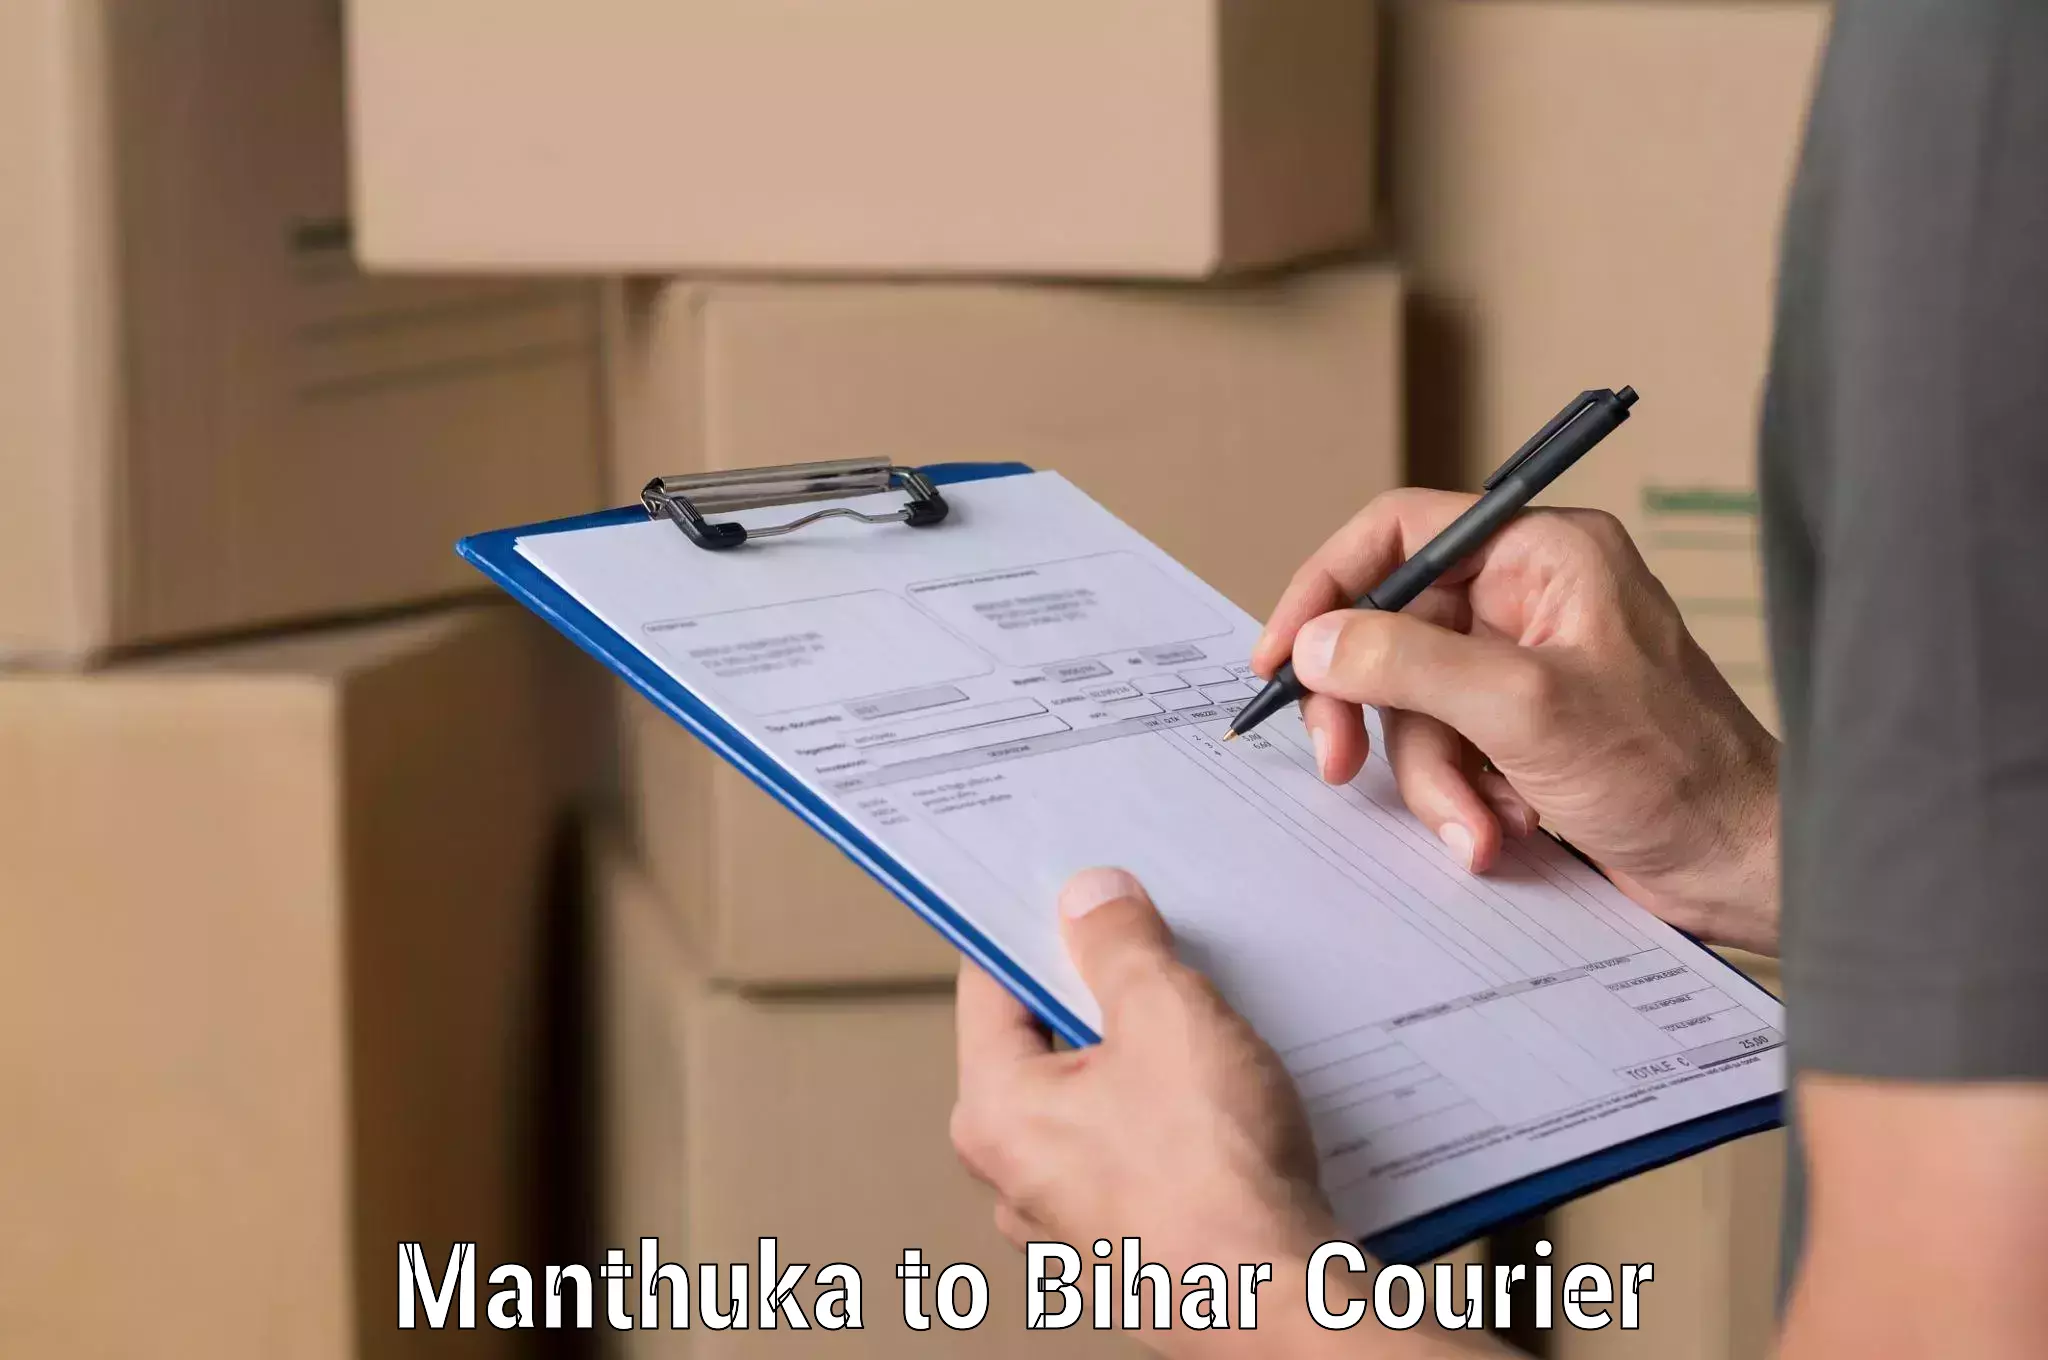 Courier service innovation Manthuka to Katoria